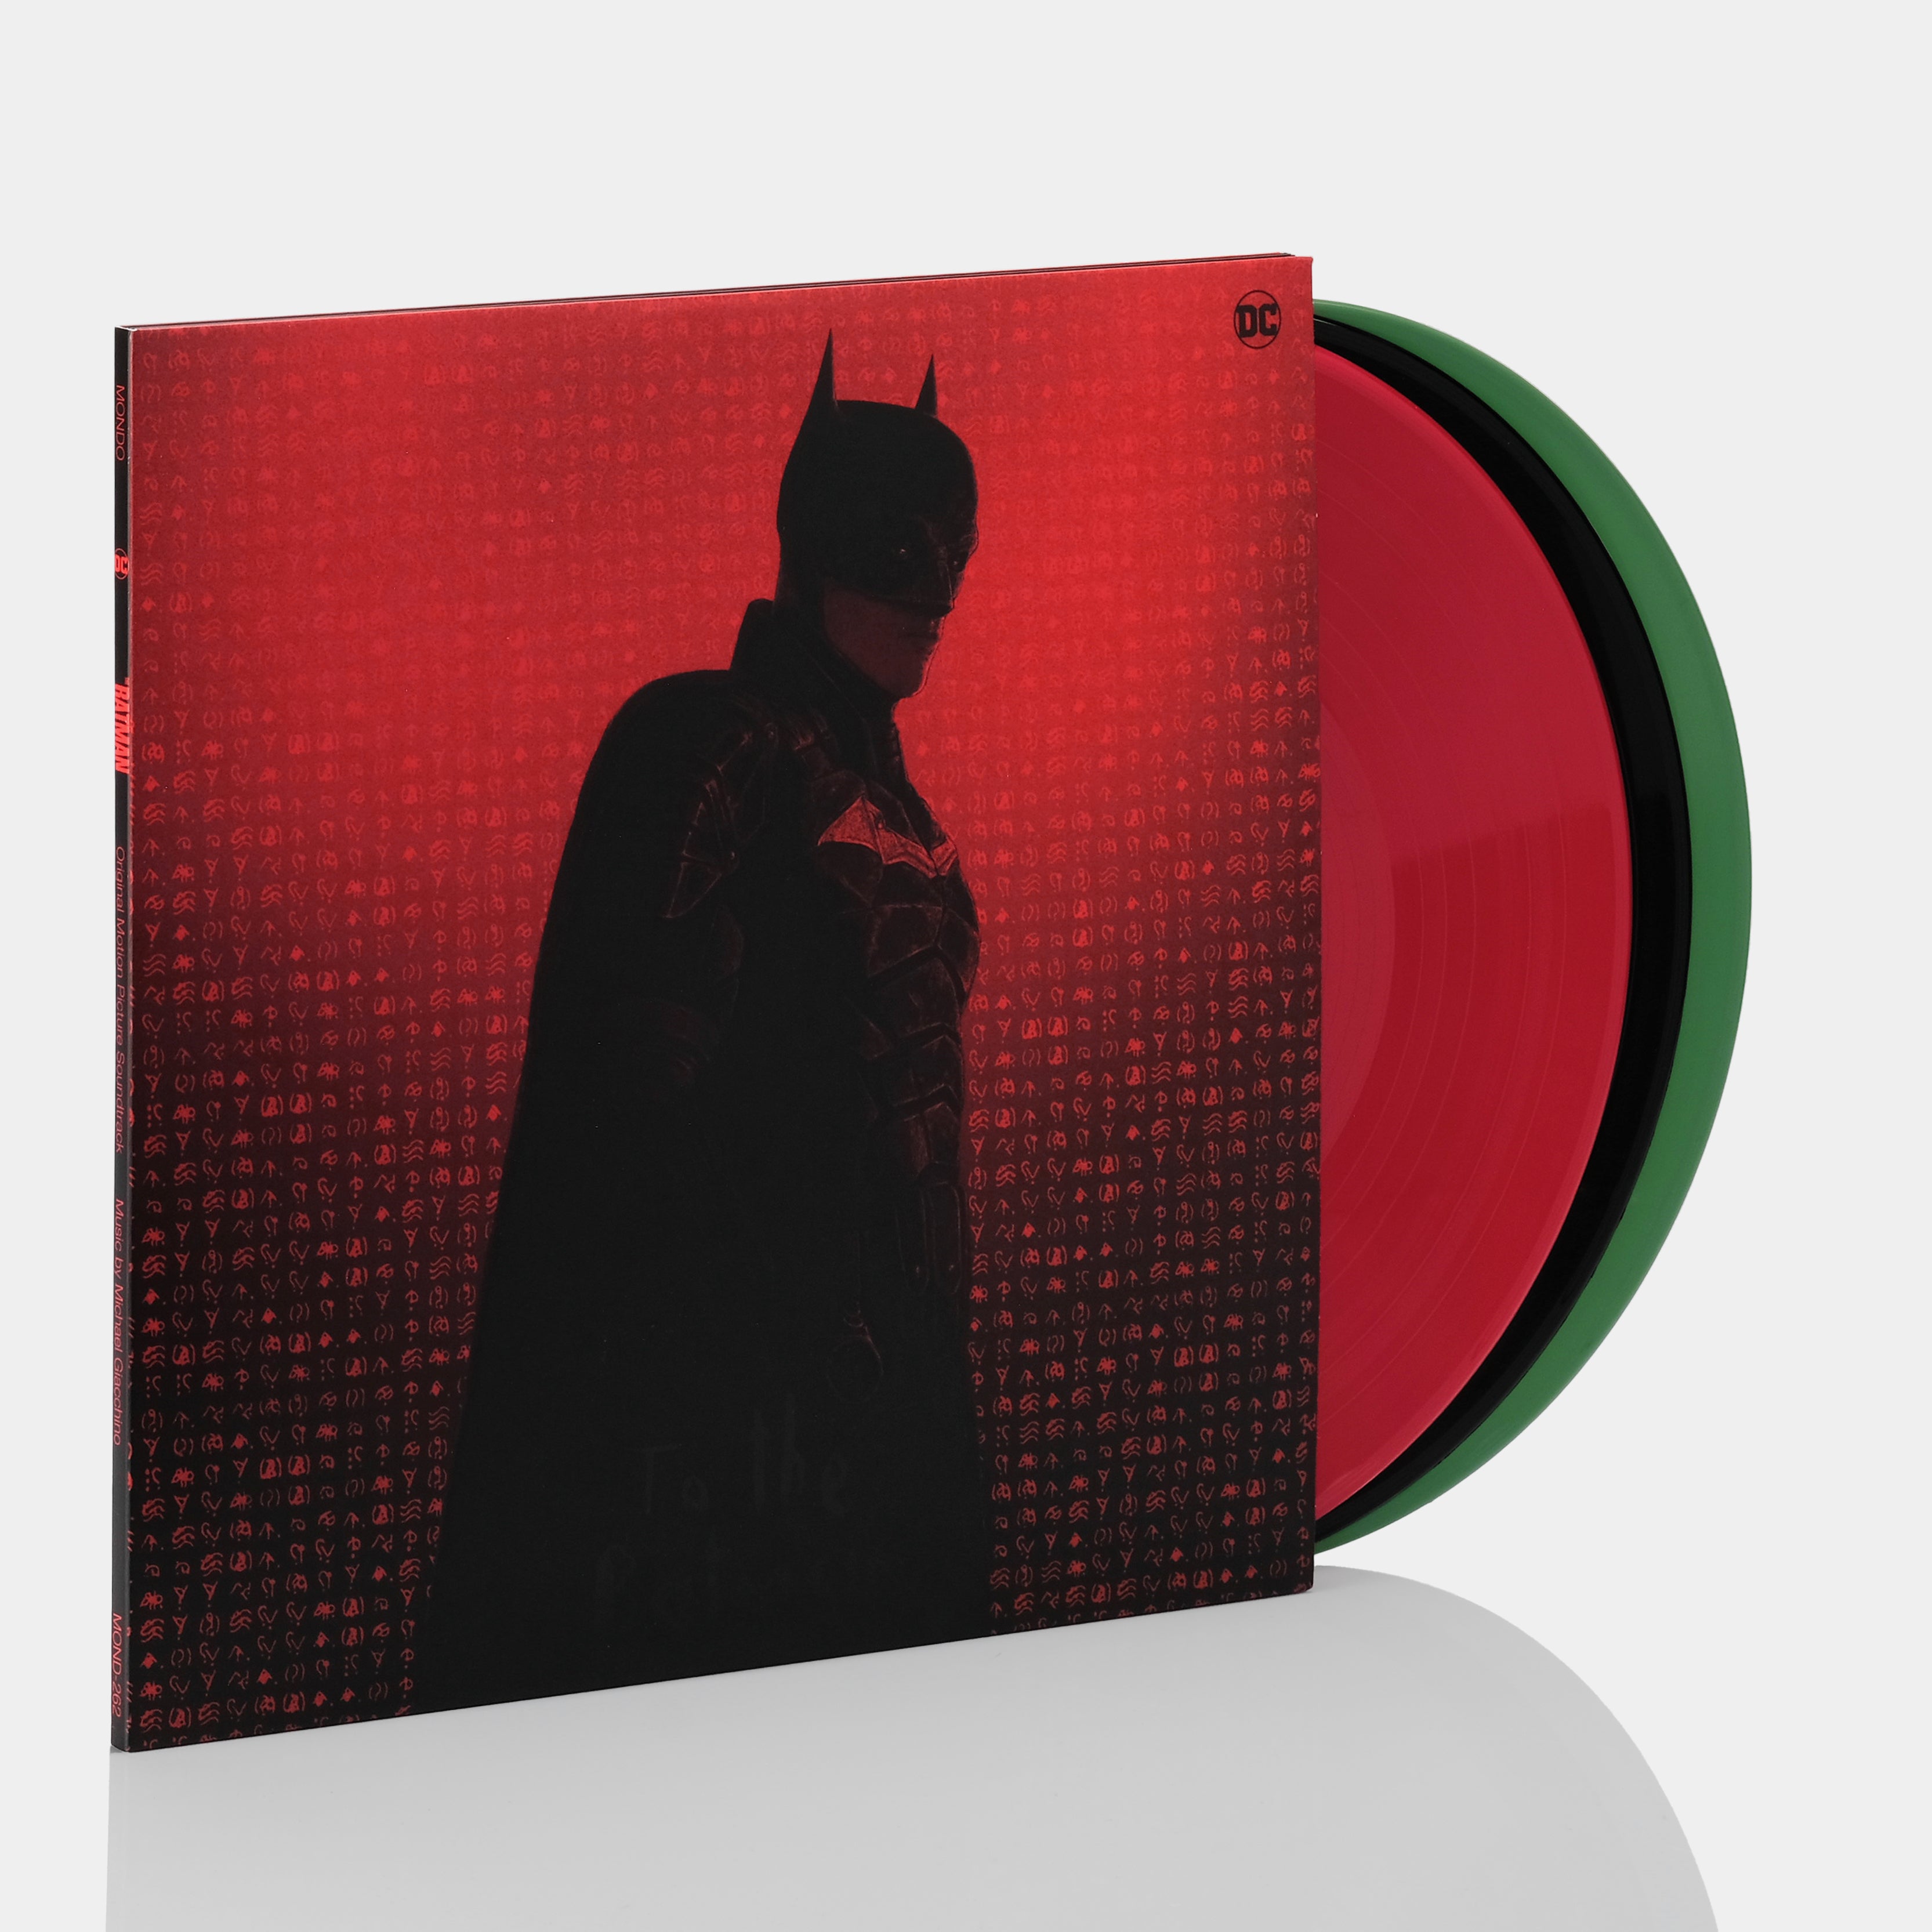 The Batman (Original Motion Picture Soundtrack) 3xLP Red, Black and Green Vinyl Record